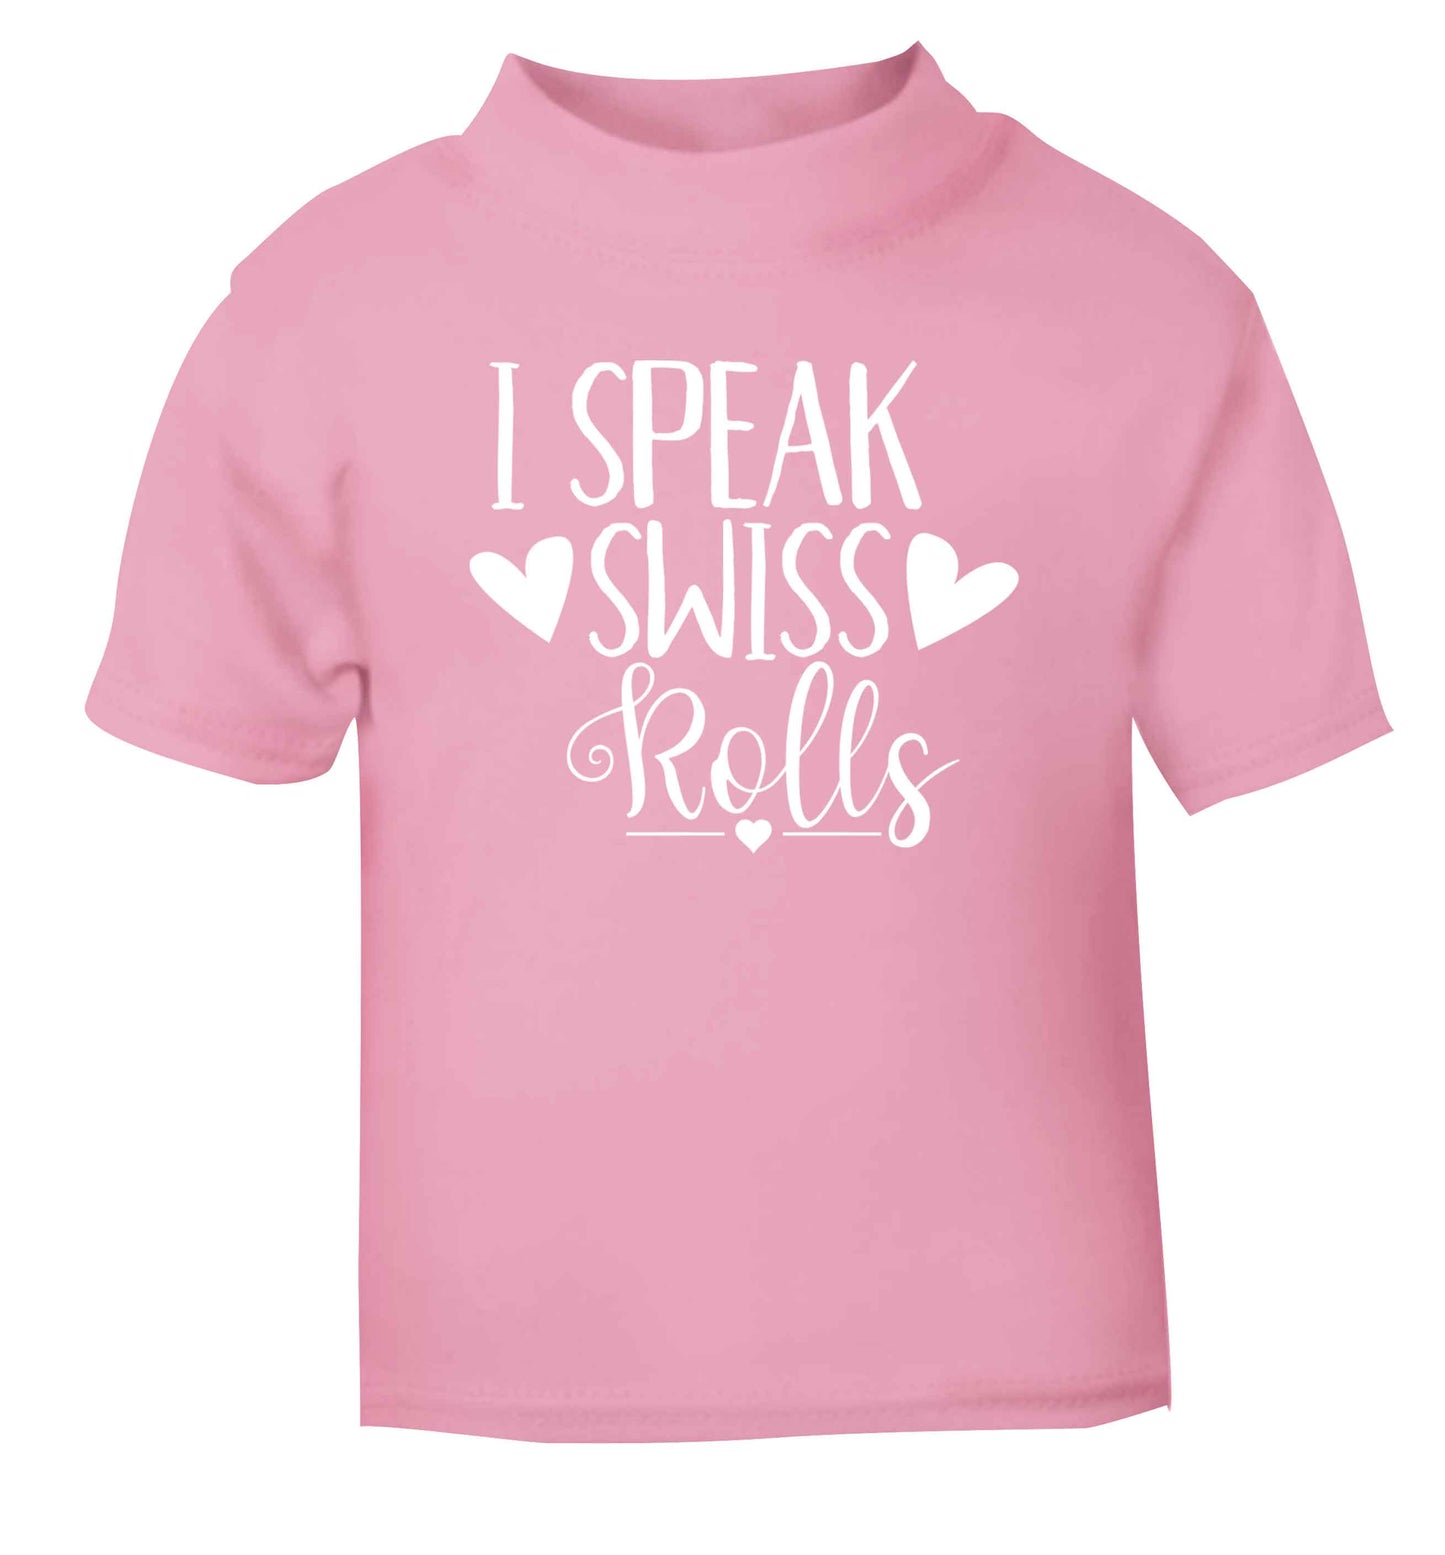 I speak swiss..rolls light pink Baby Toddler Tshirt 2 Years